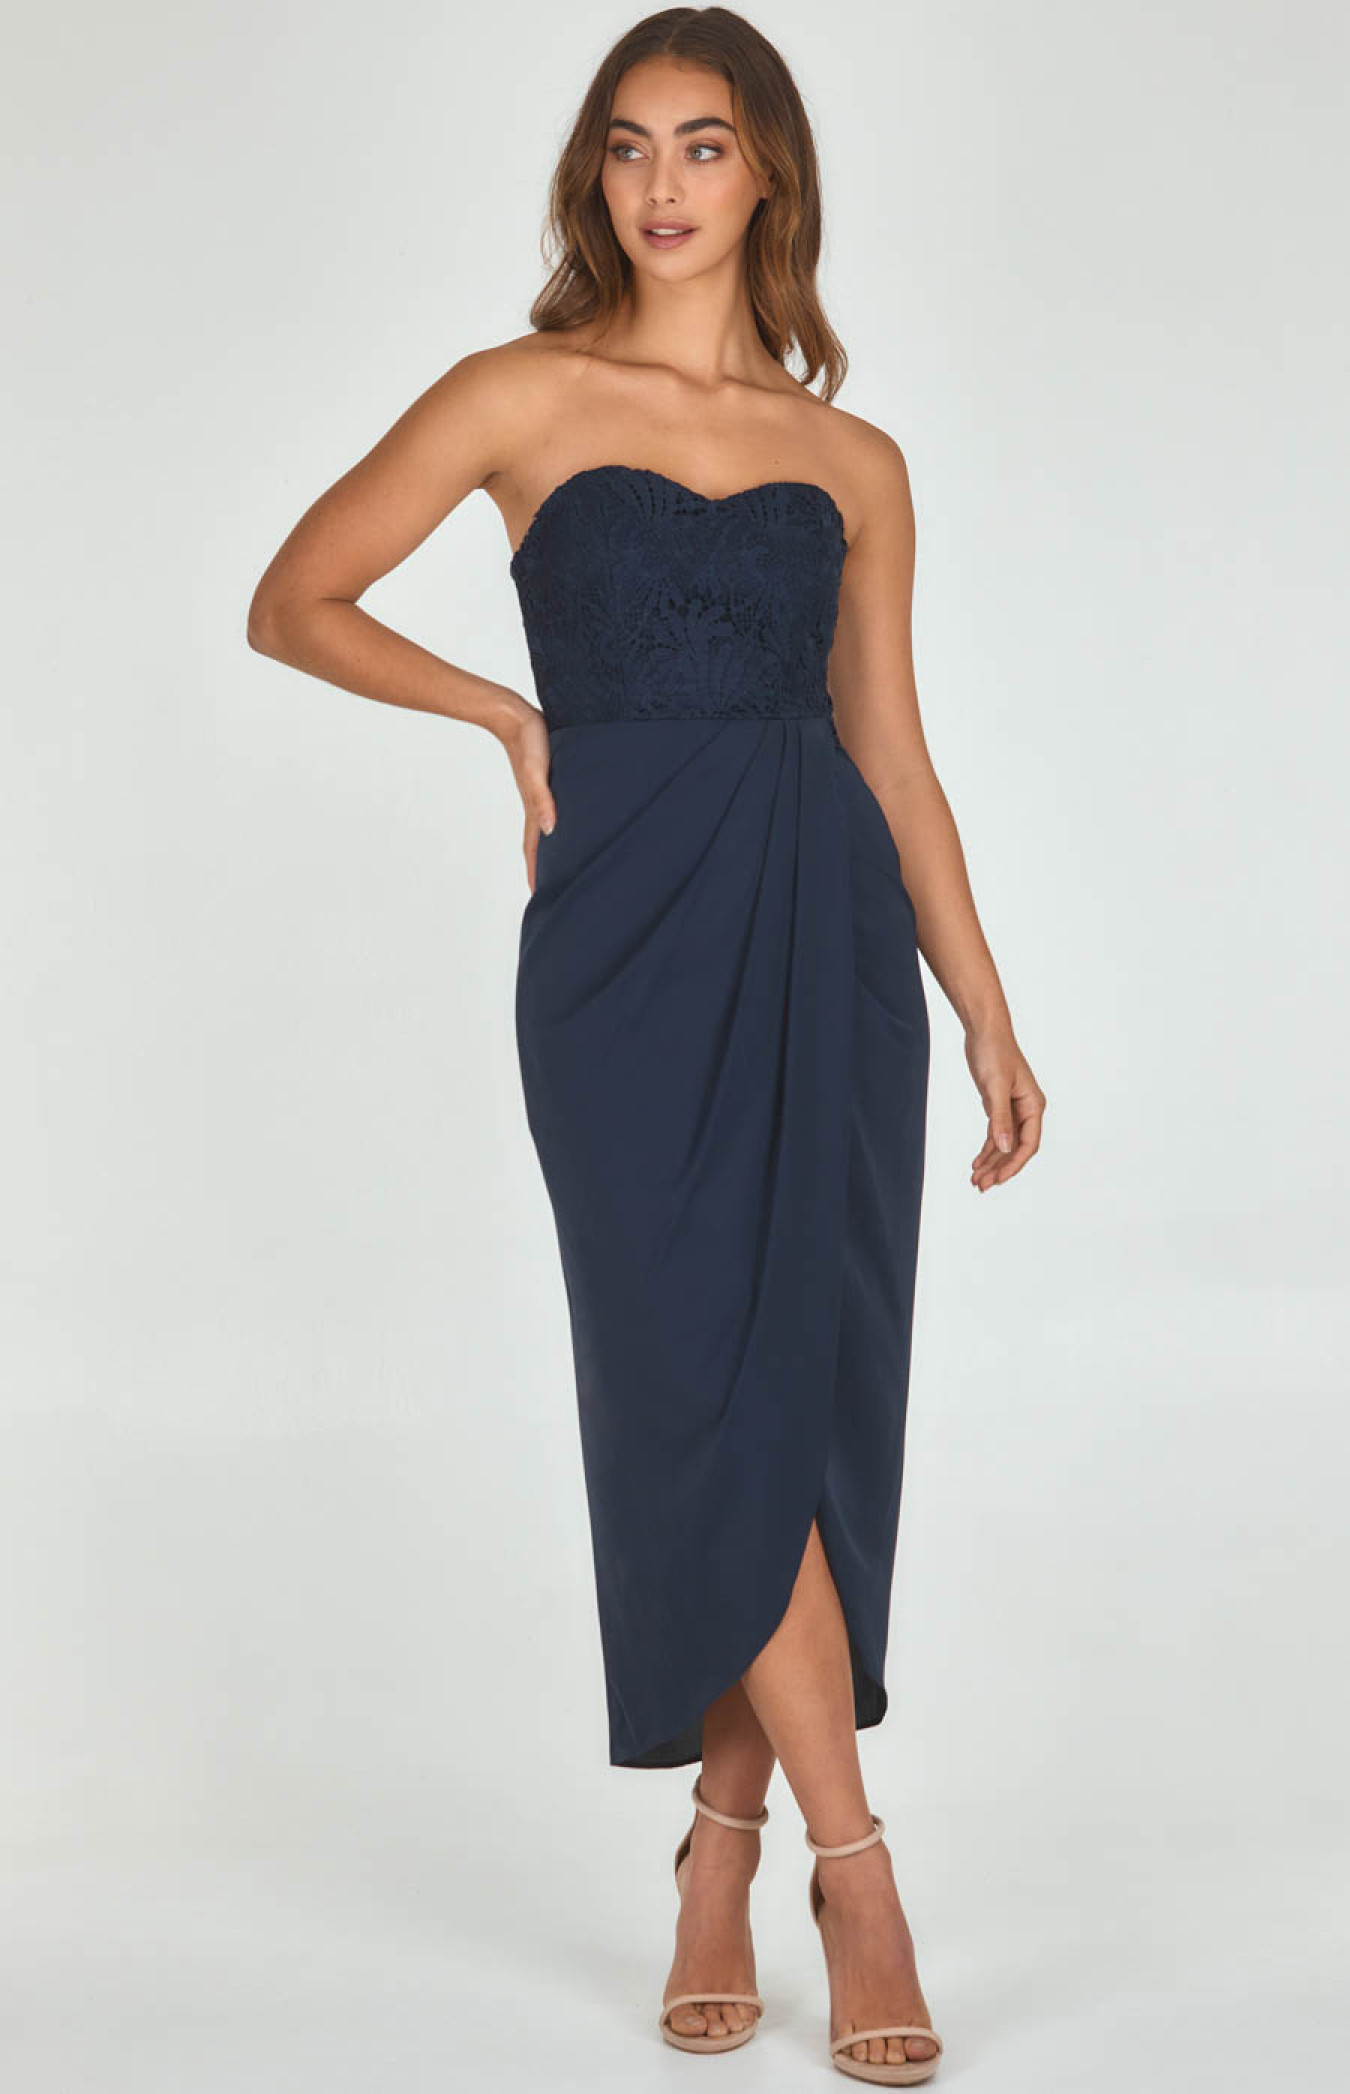 Lace Bodice Dress with Contrast Draped Hem (SDR501A)